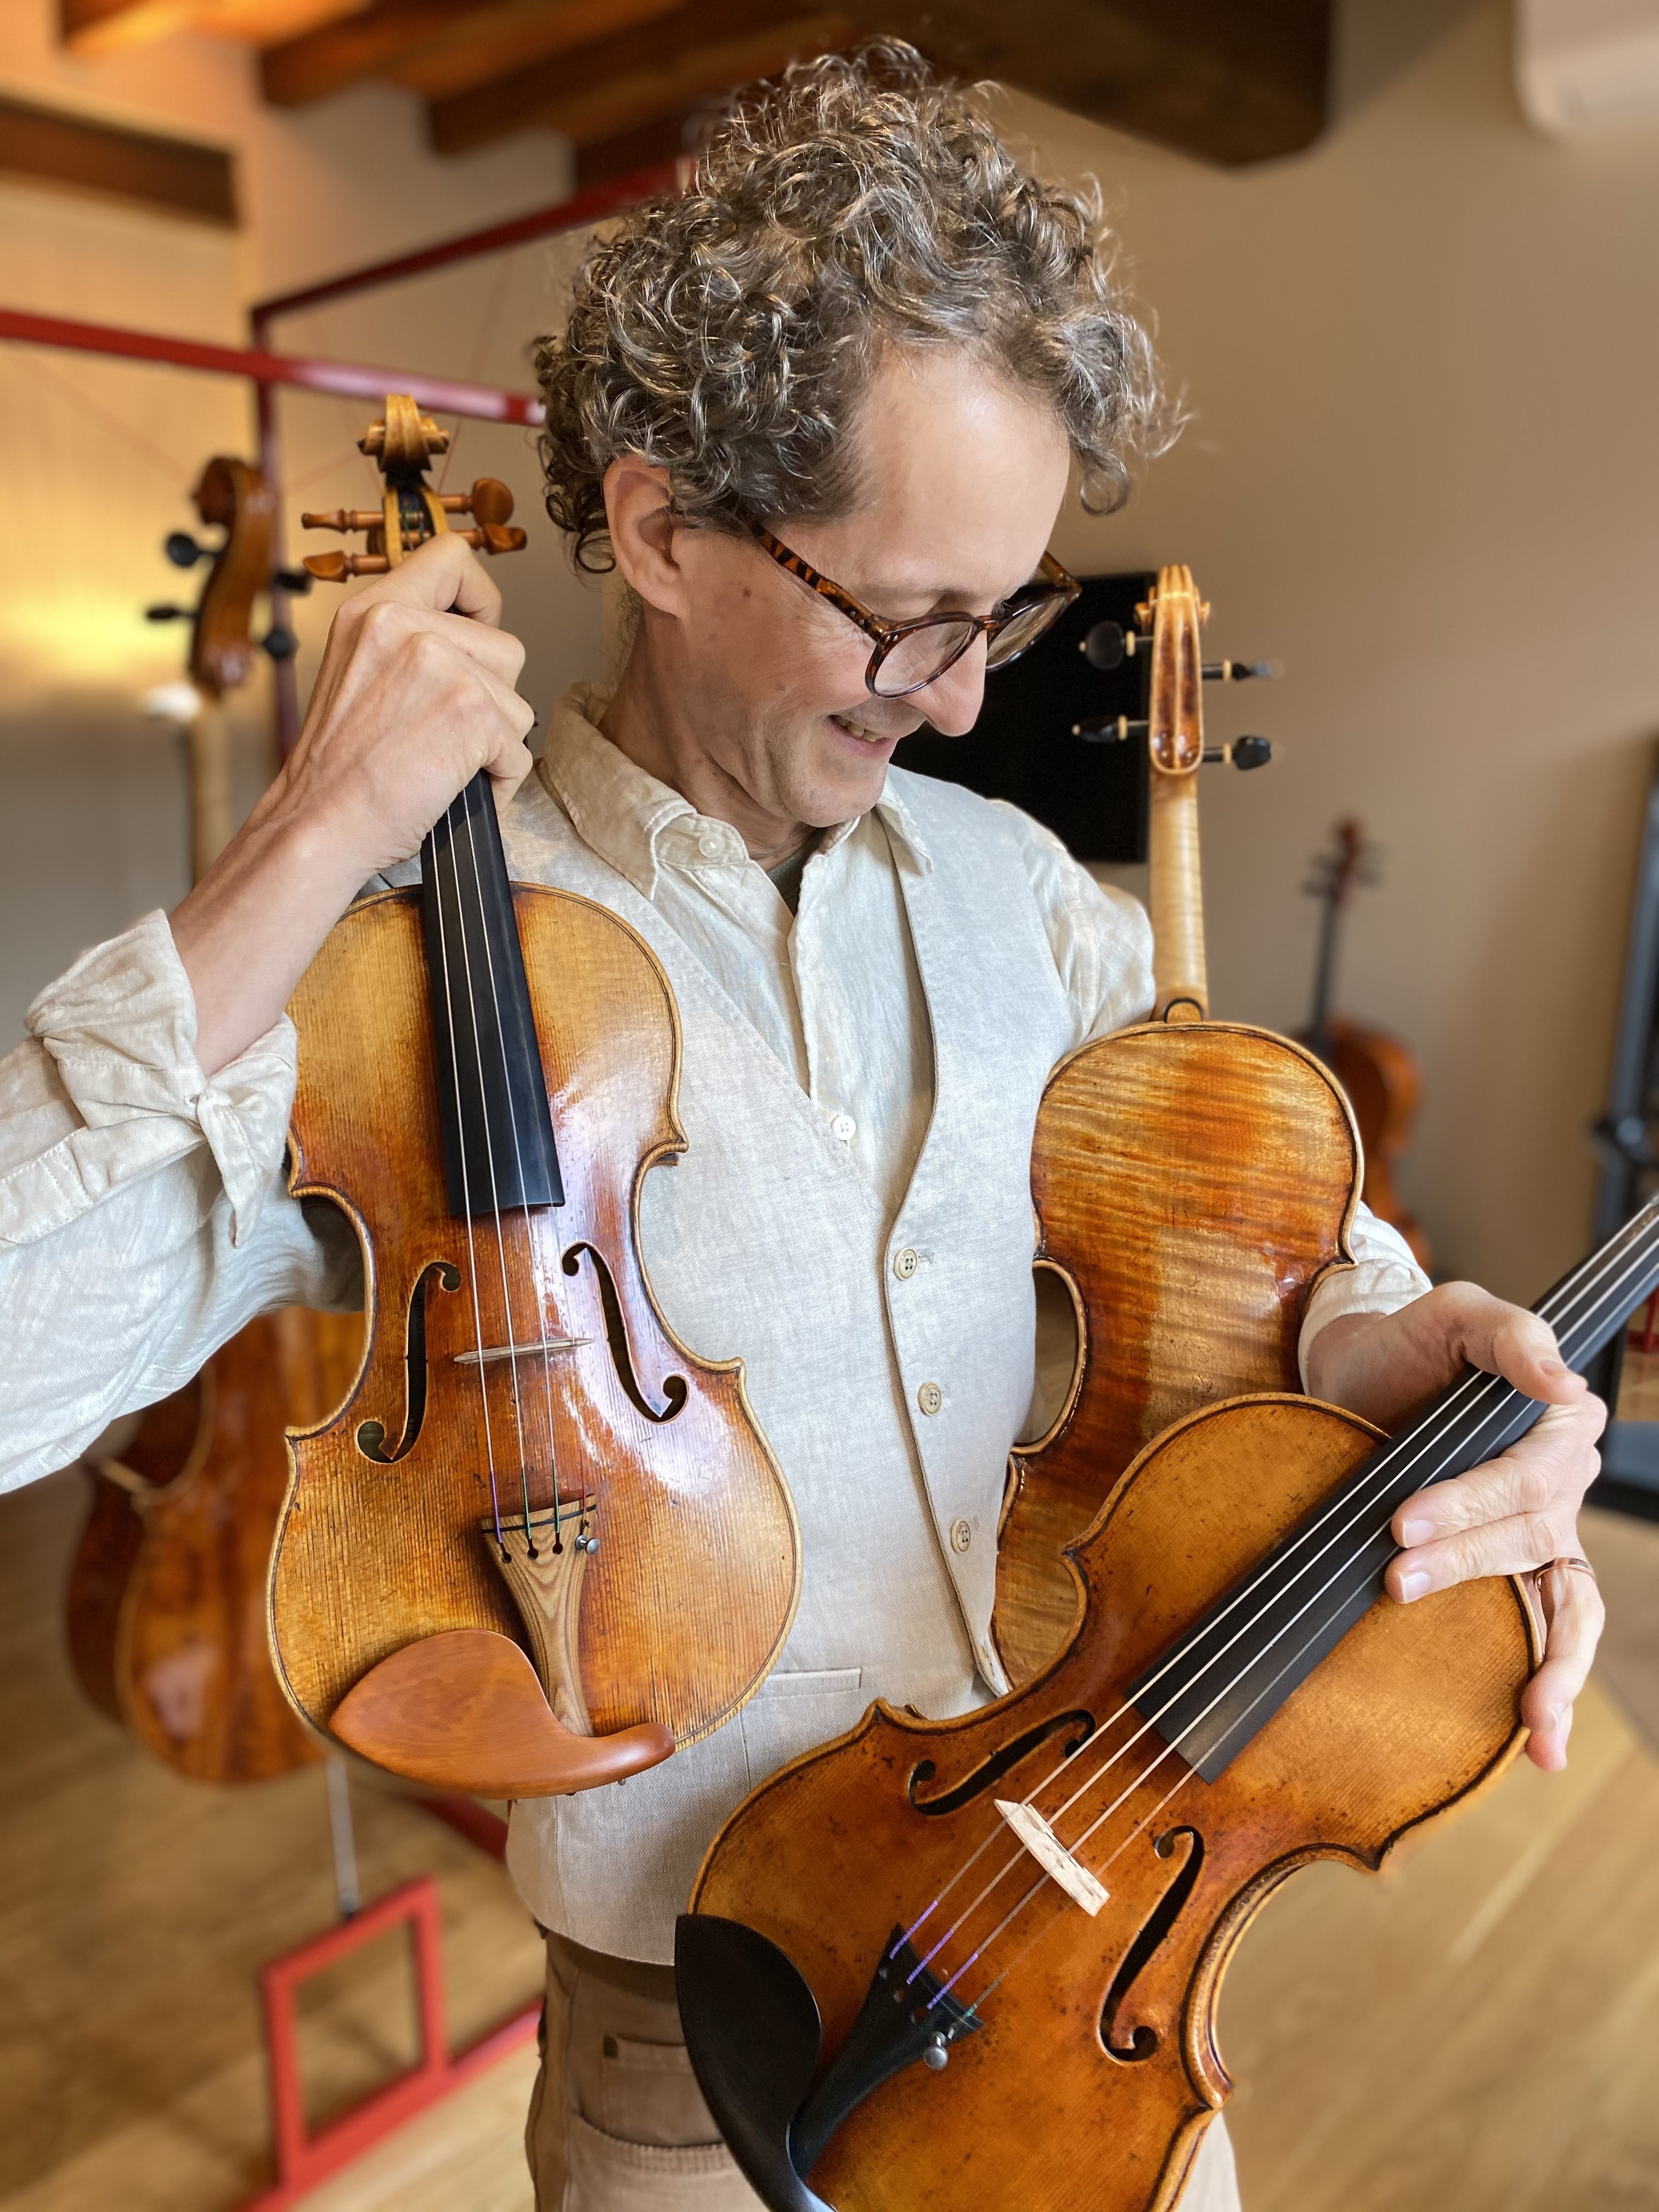 Violin Maker holding three of his best violins